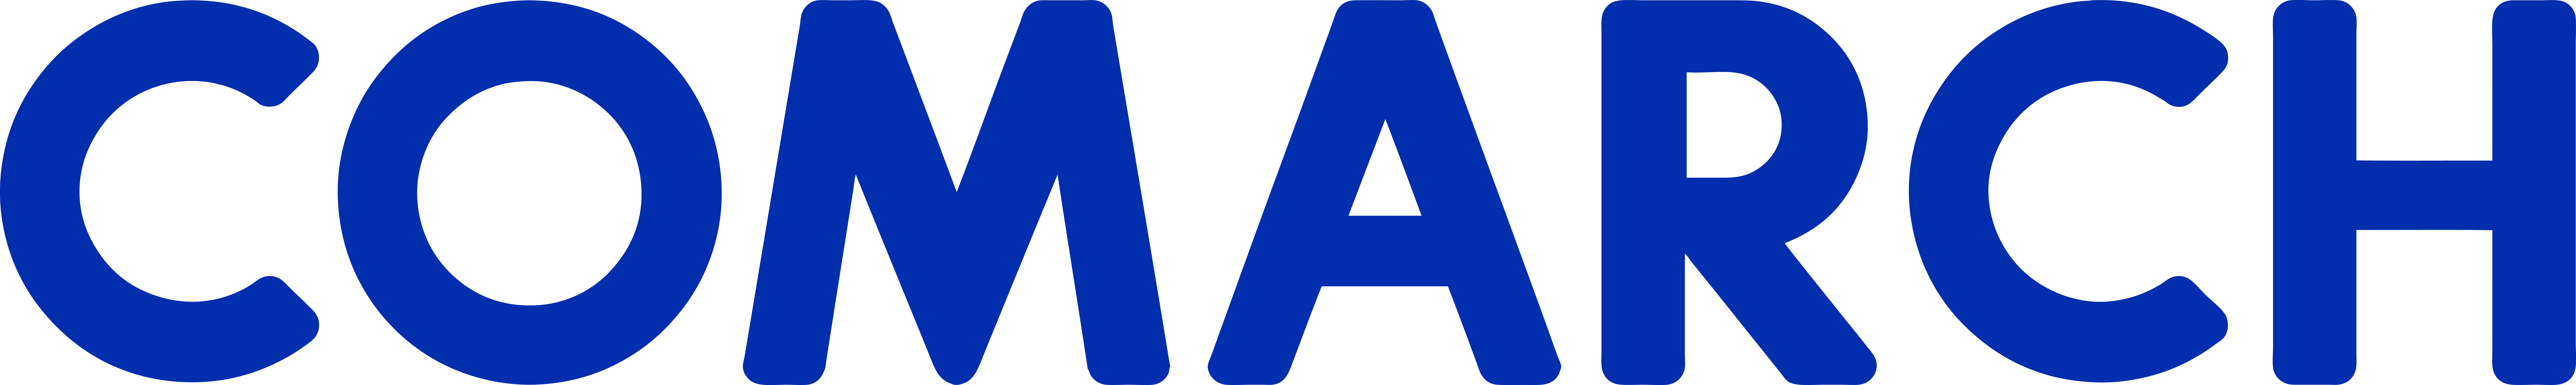 Logo wpisu Comarch SA - e-Urząd